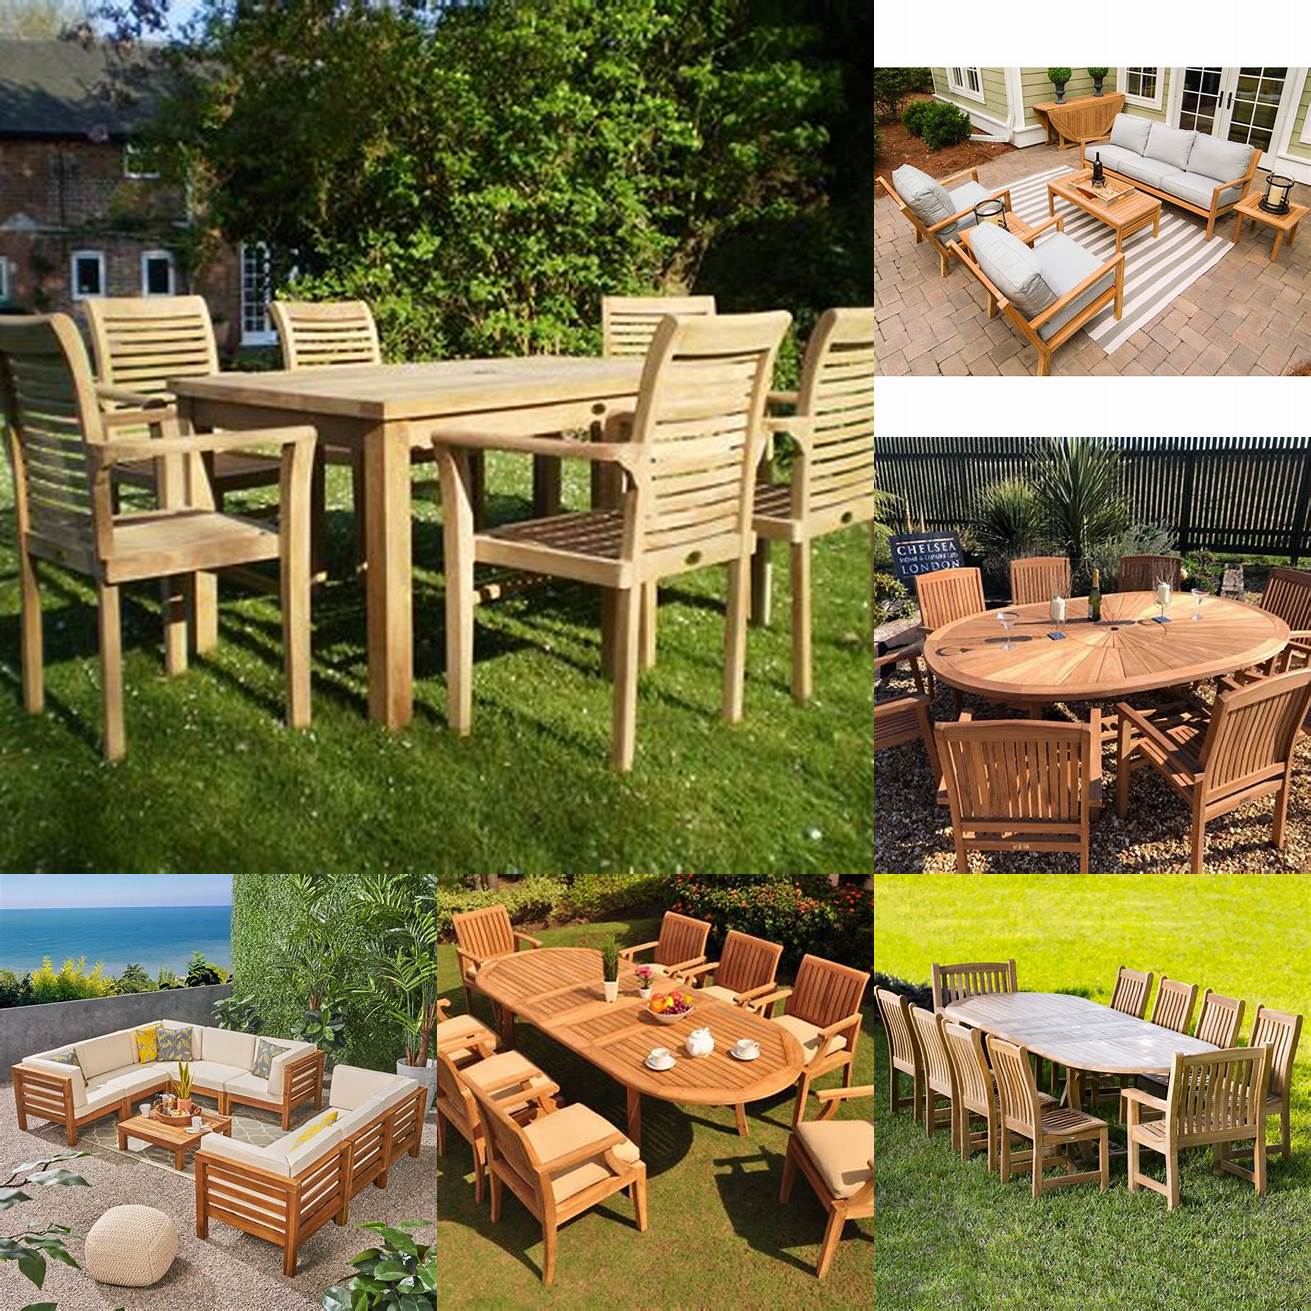 Teak outdoor furniture set in a backyard